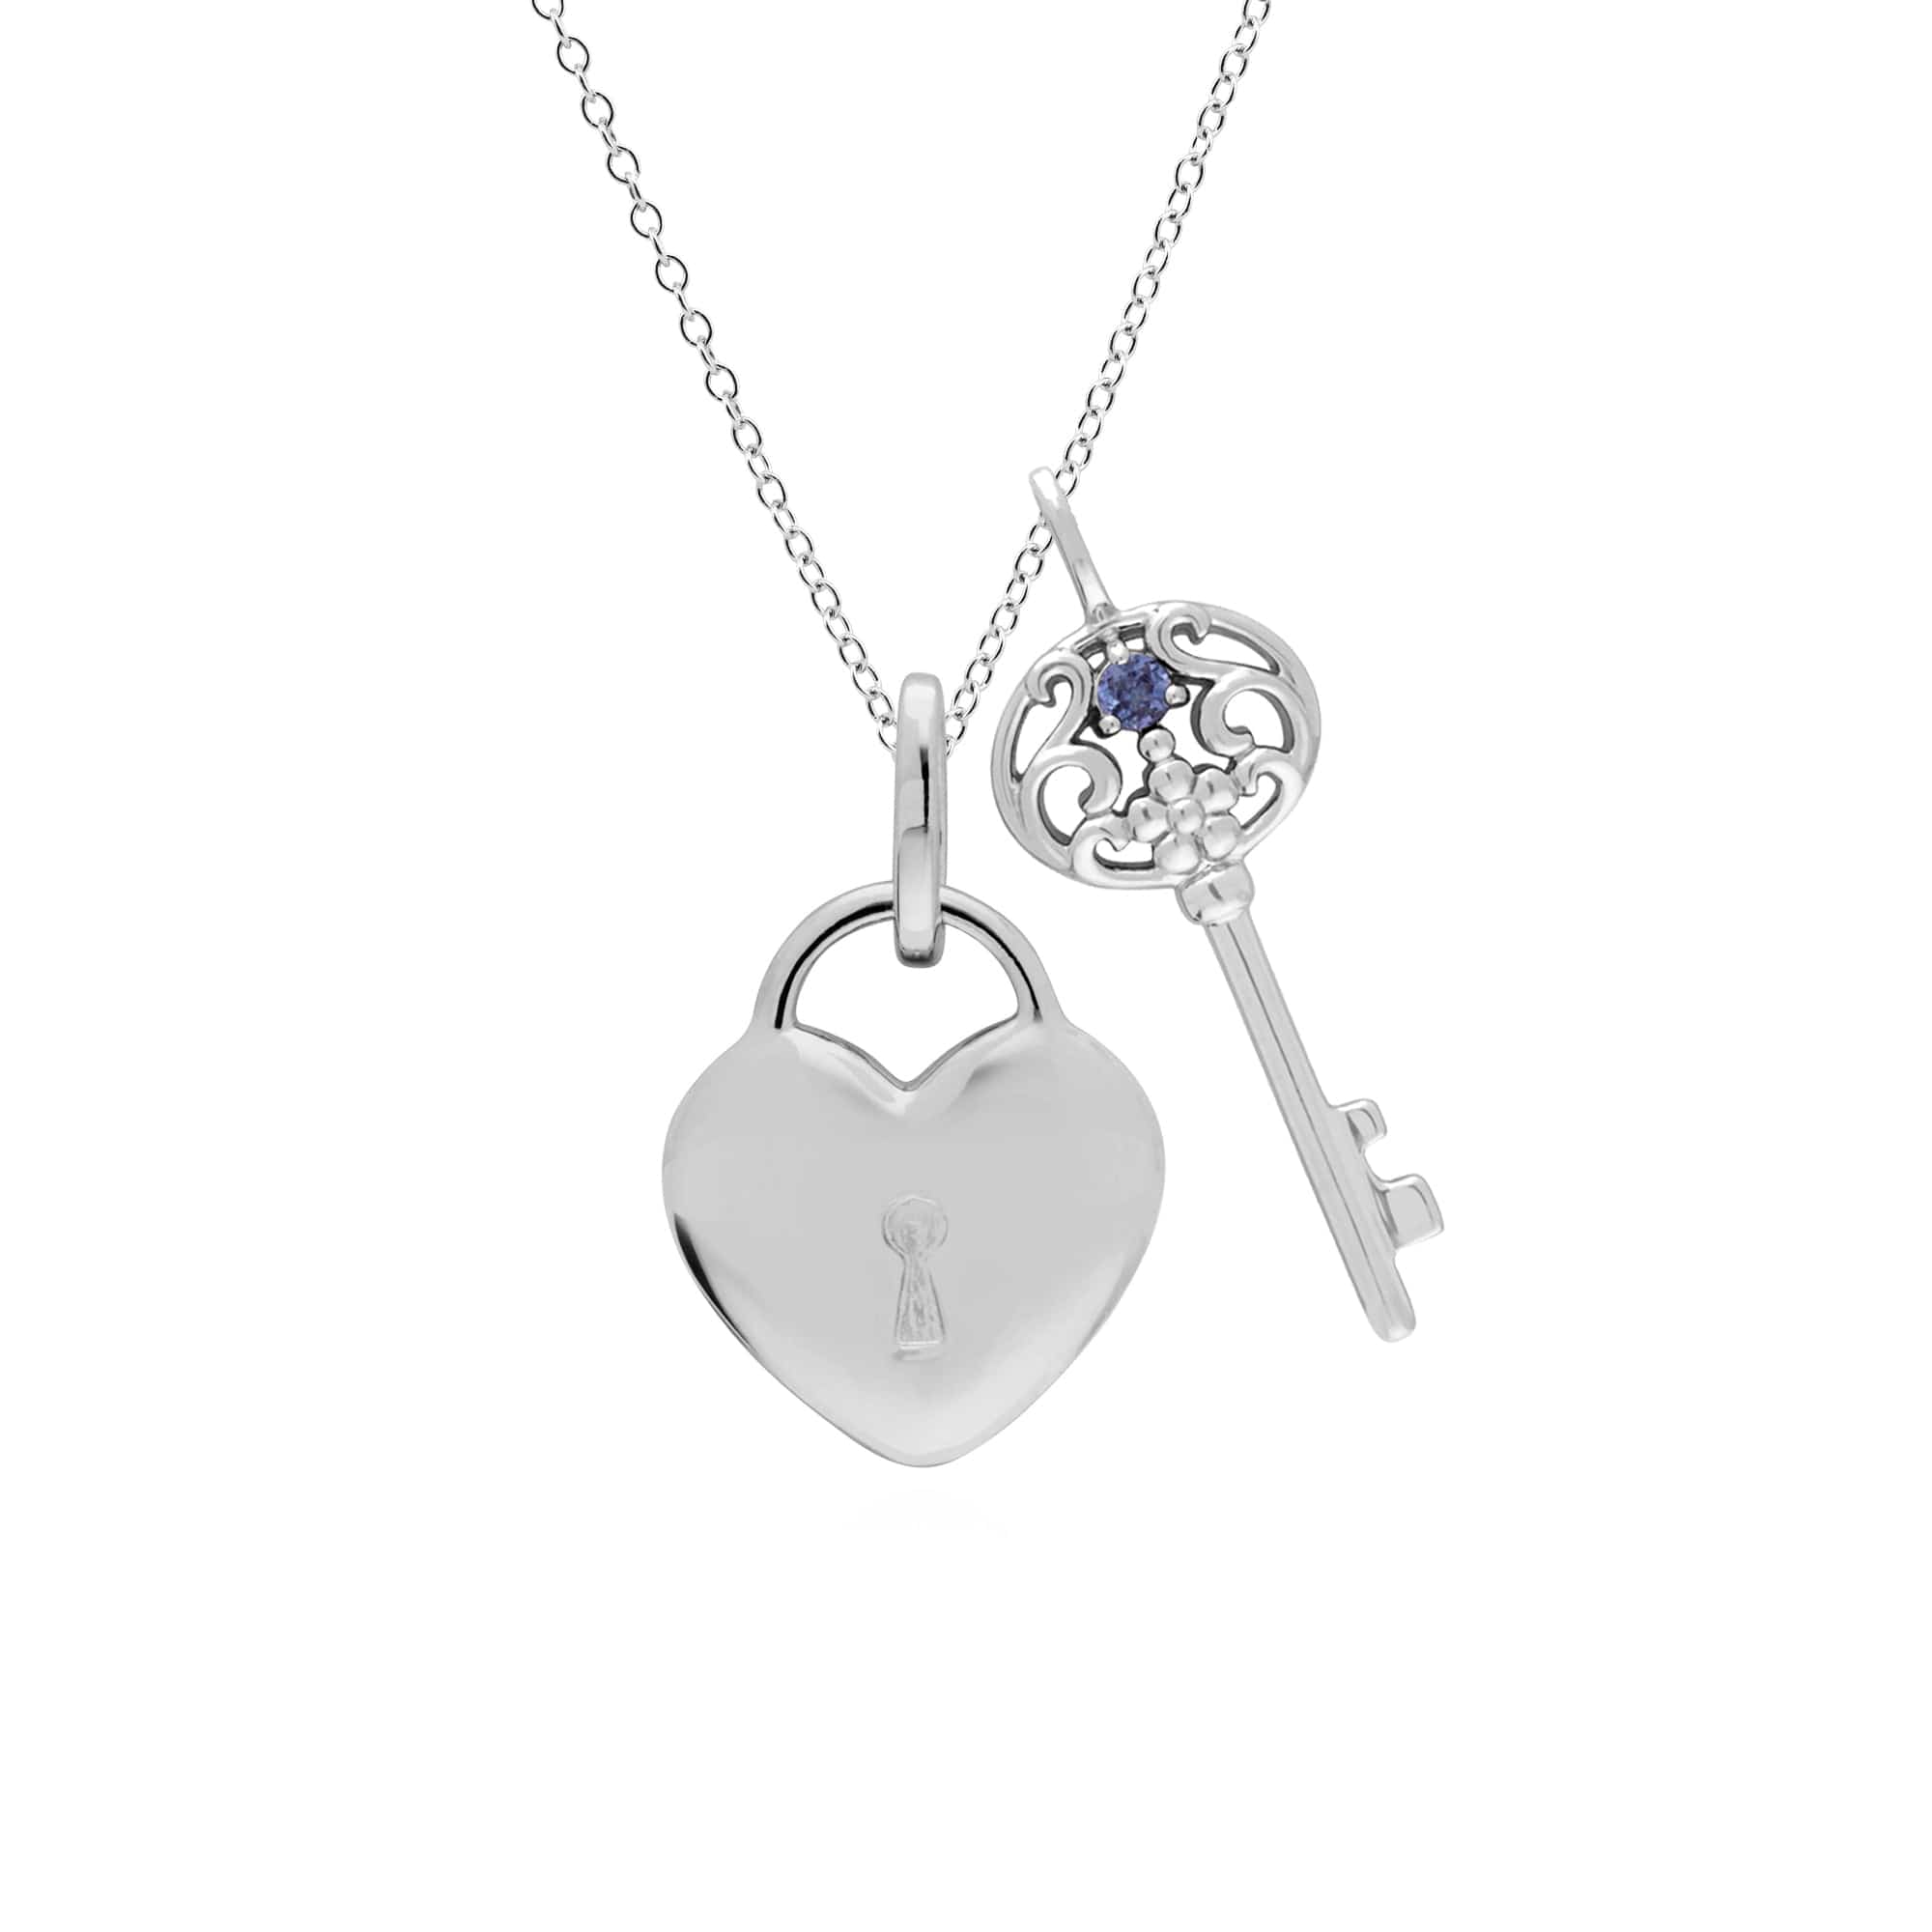 270P026812925-270P027001925 Classic Heart Lock Pendant & Tanzanite Big Key Charm in 925 Sterling Silver 1